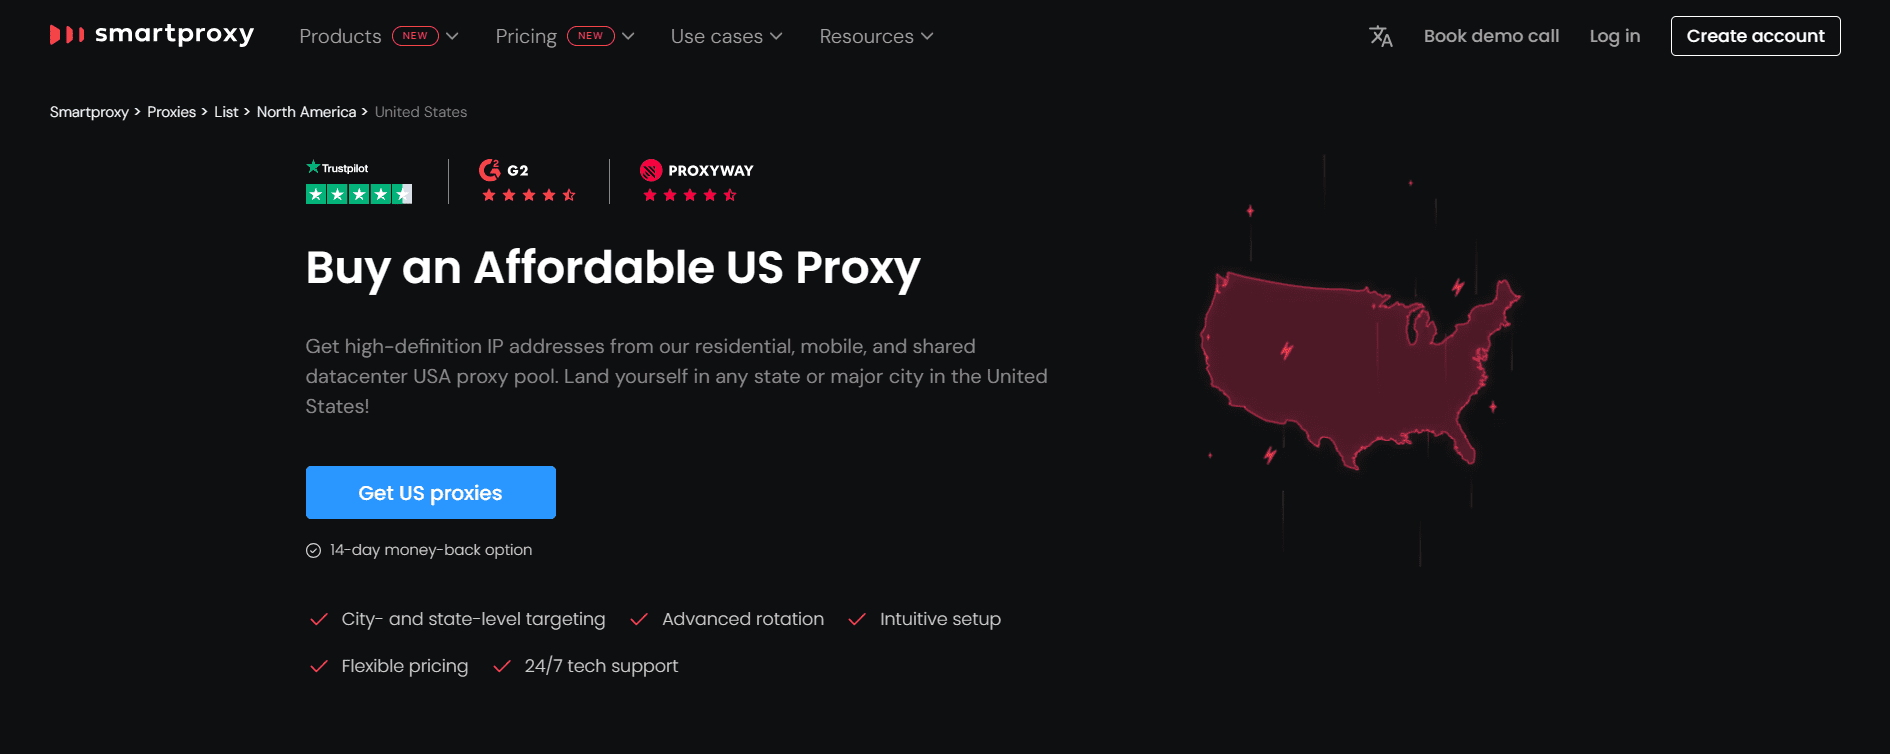 smartproxy - best us proxy service